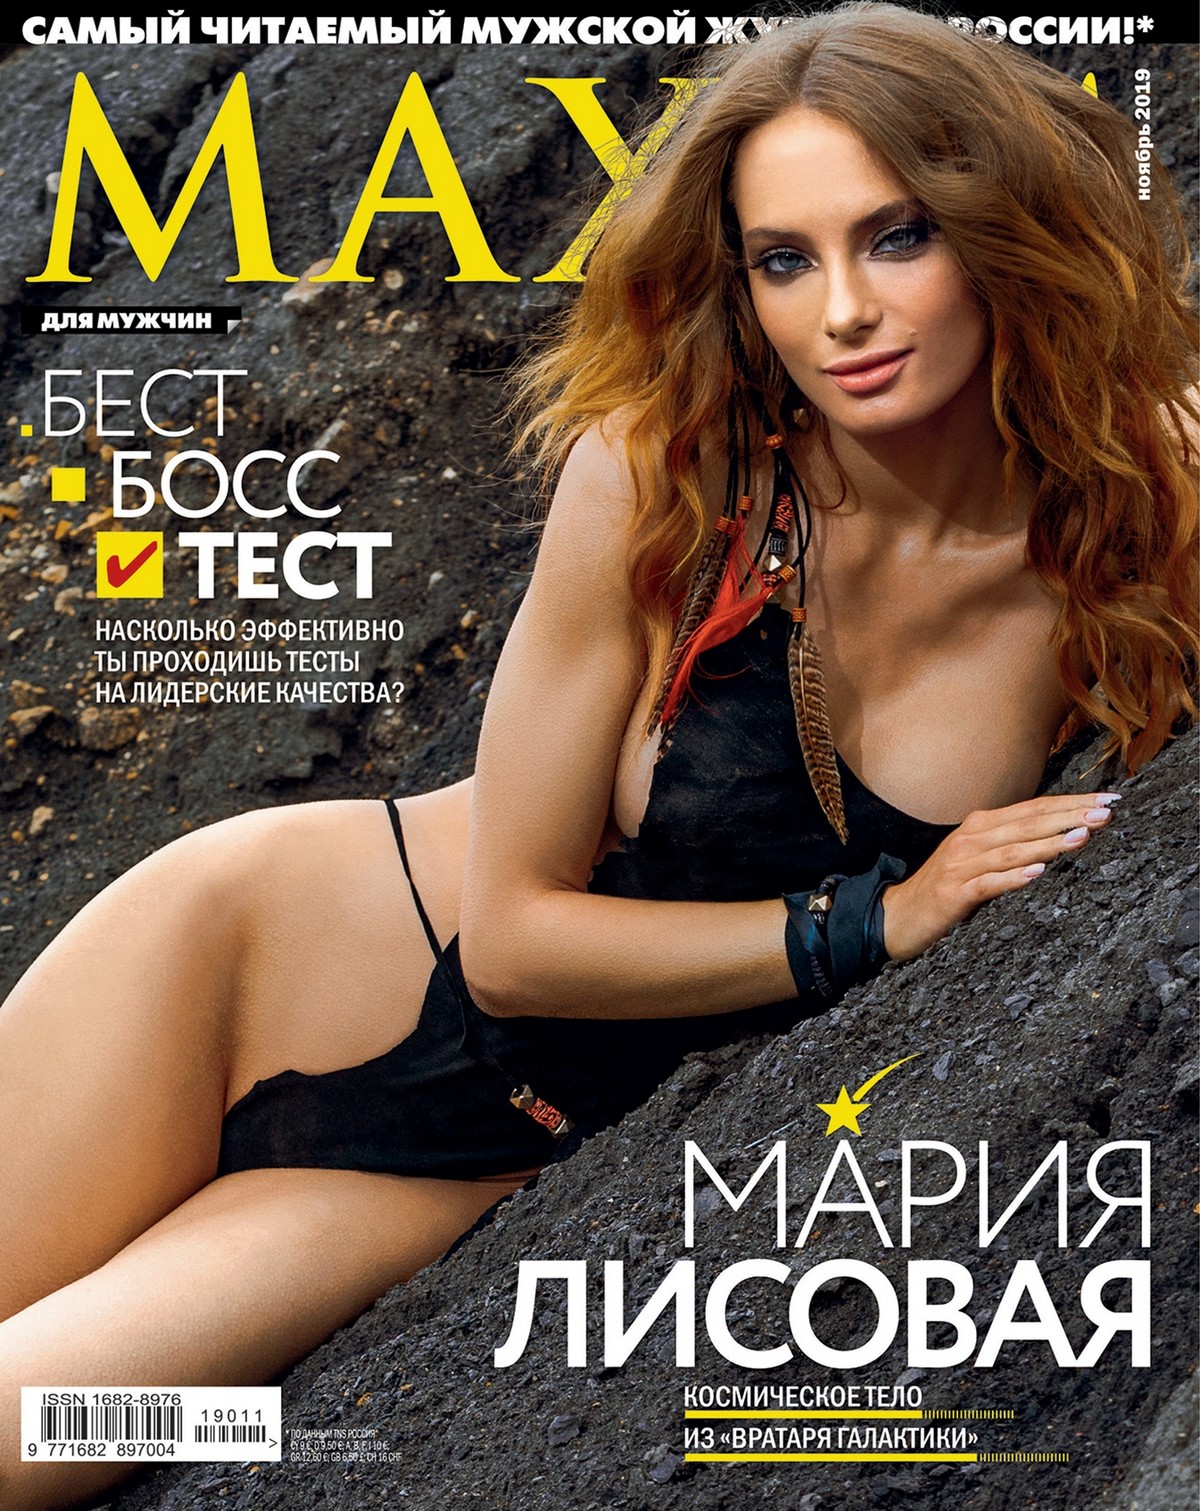 Maksim журнал